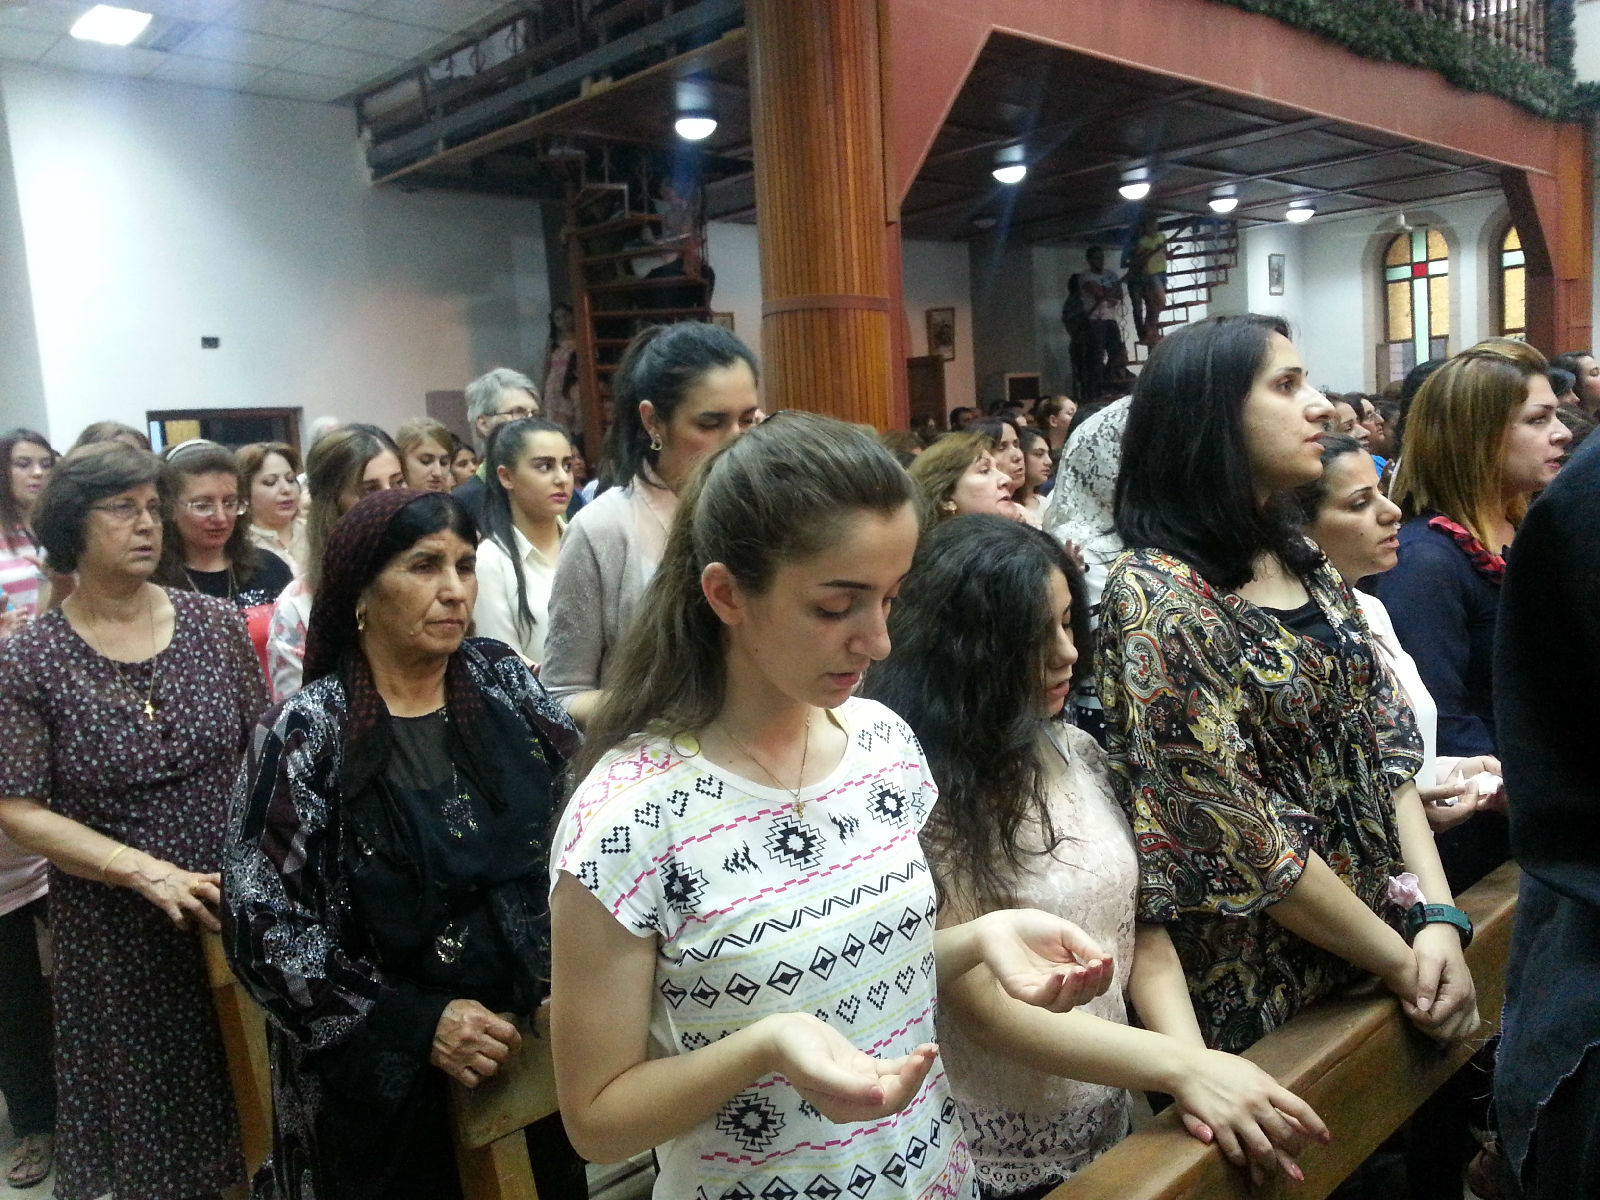 Iraqi christians united in prayer